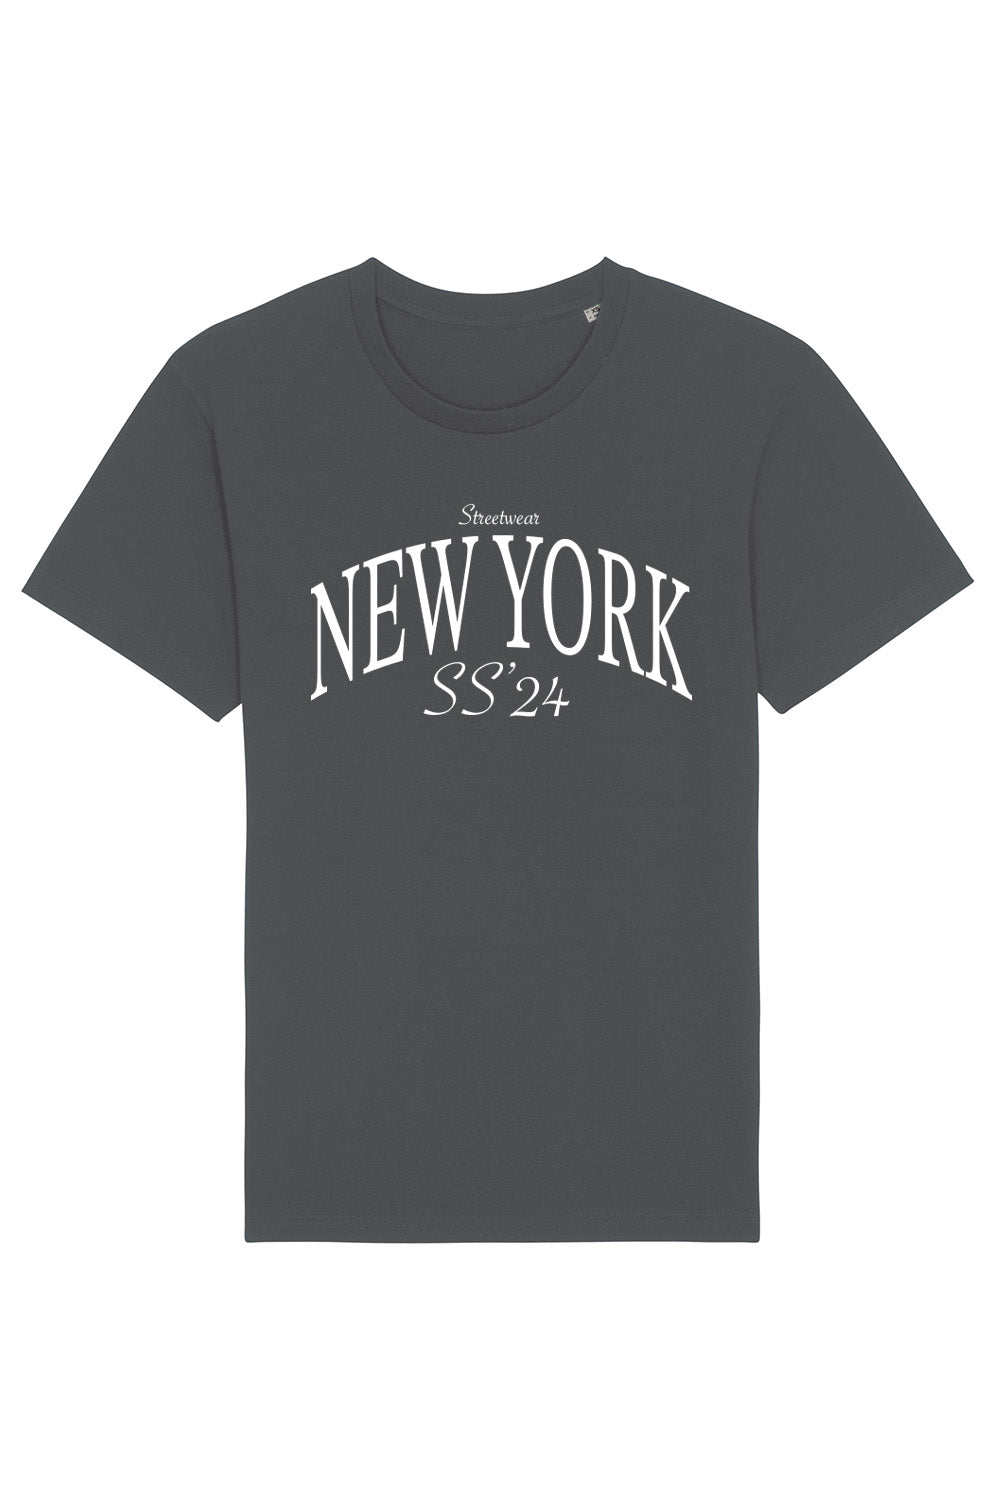 New York T-Shirt in Charcoal (Custom Packs)